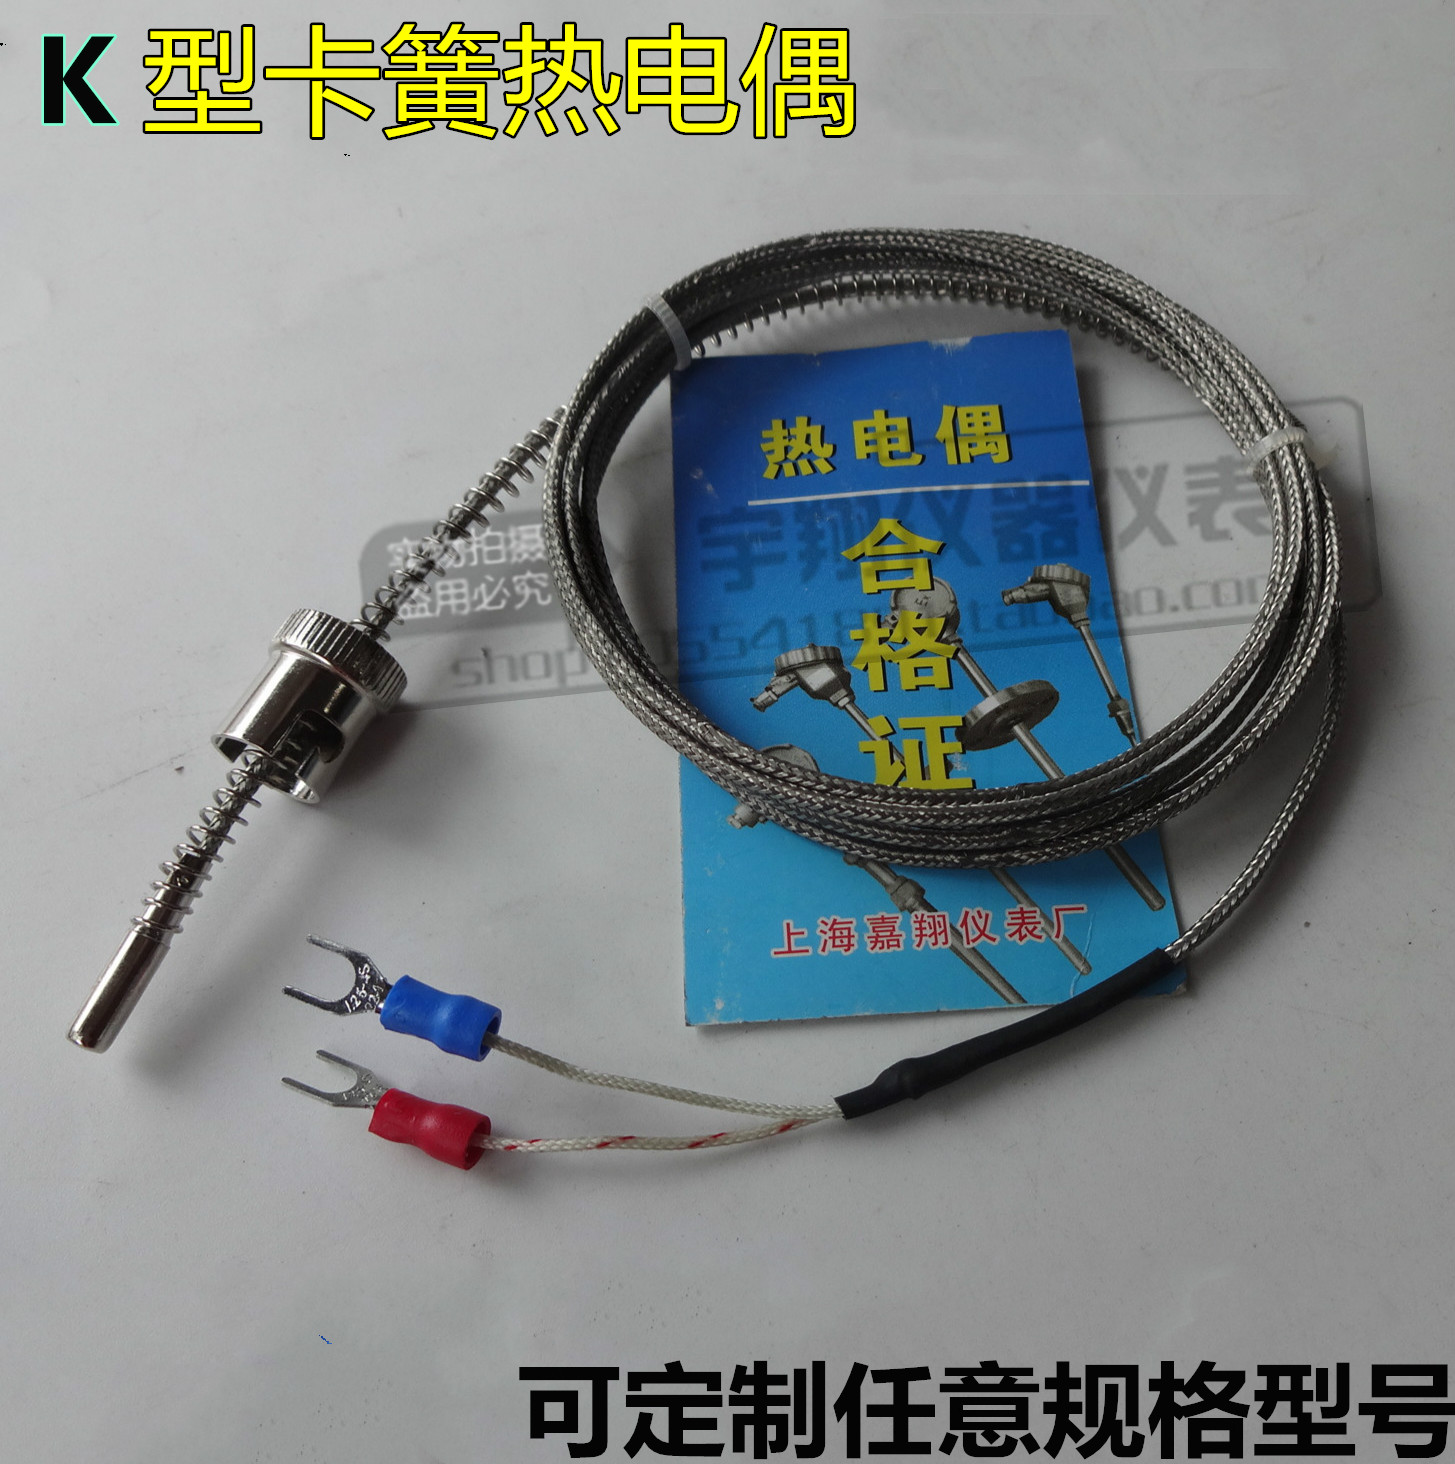 K/E型 WRNT-203可调压簧热电偶（压簧式）卡口式可调压簧热电偶